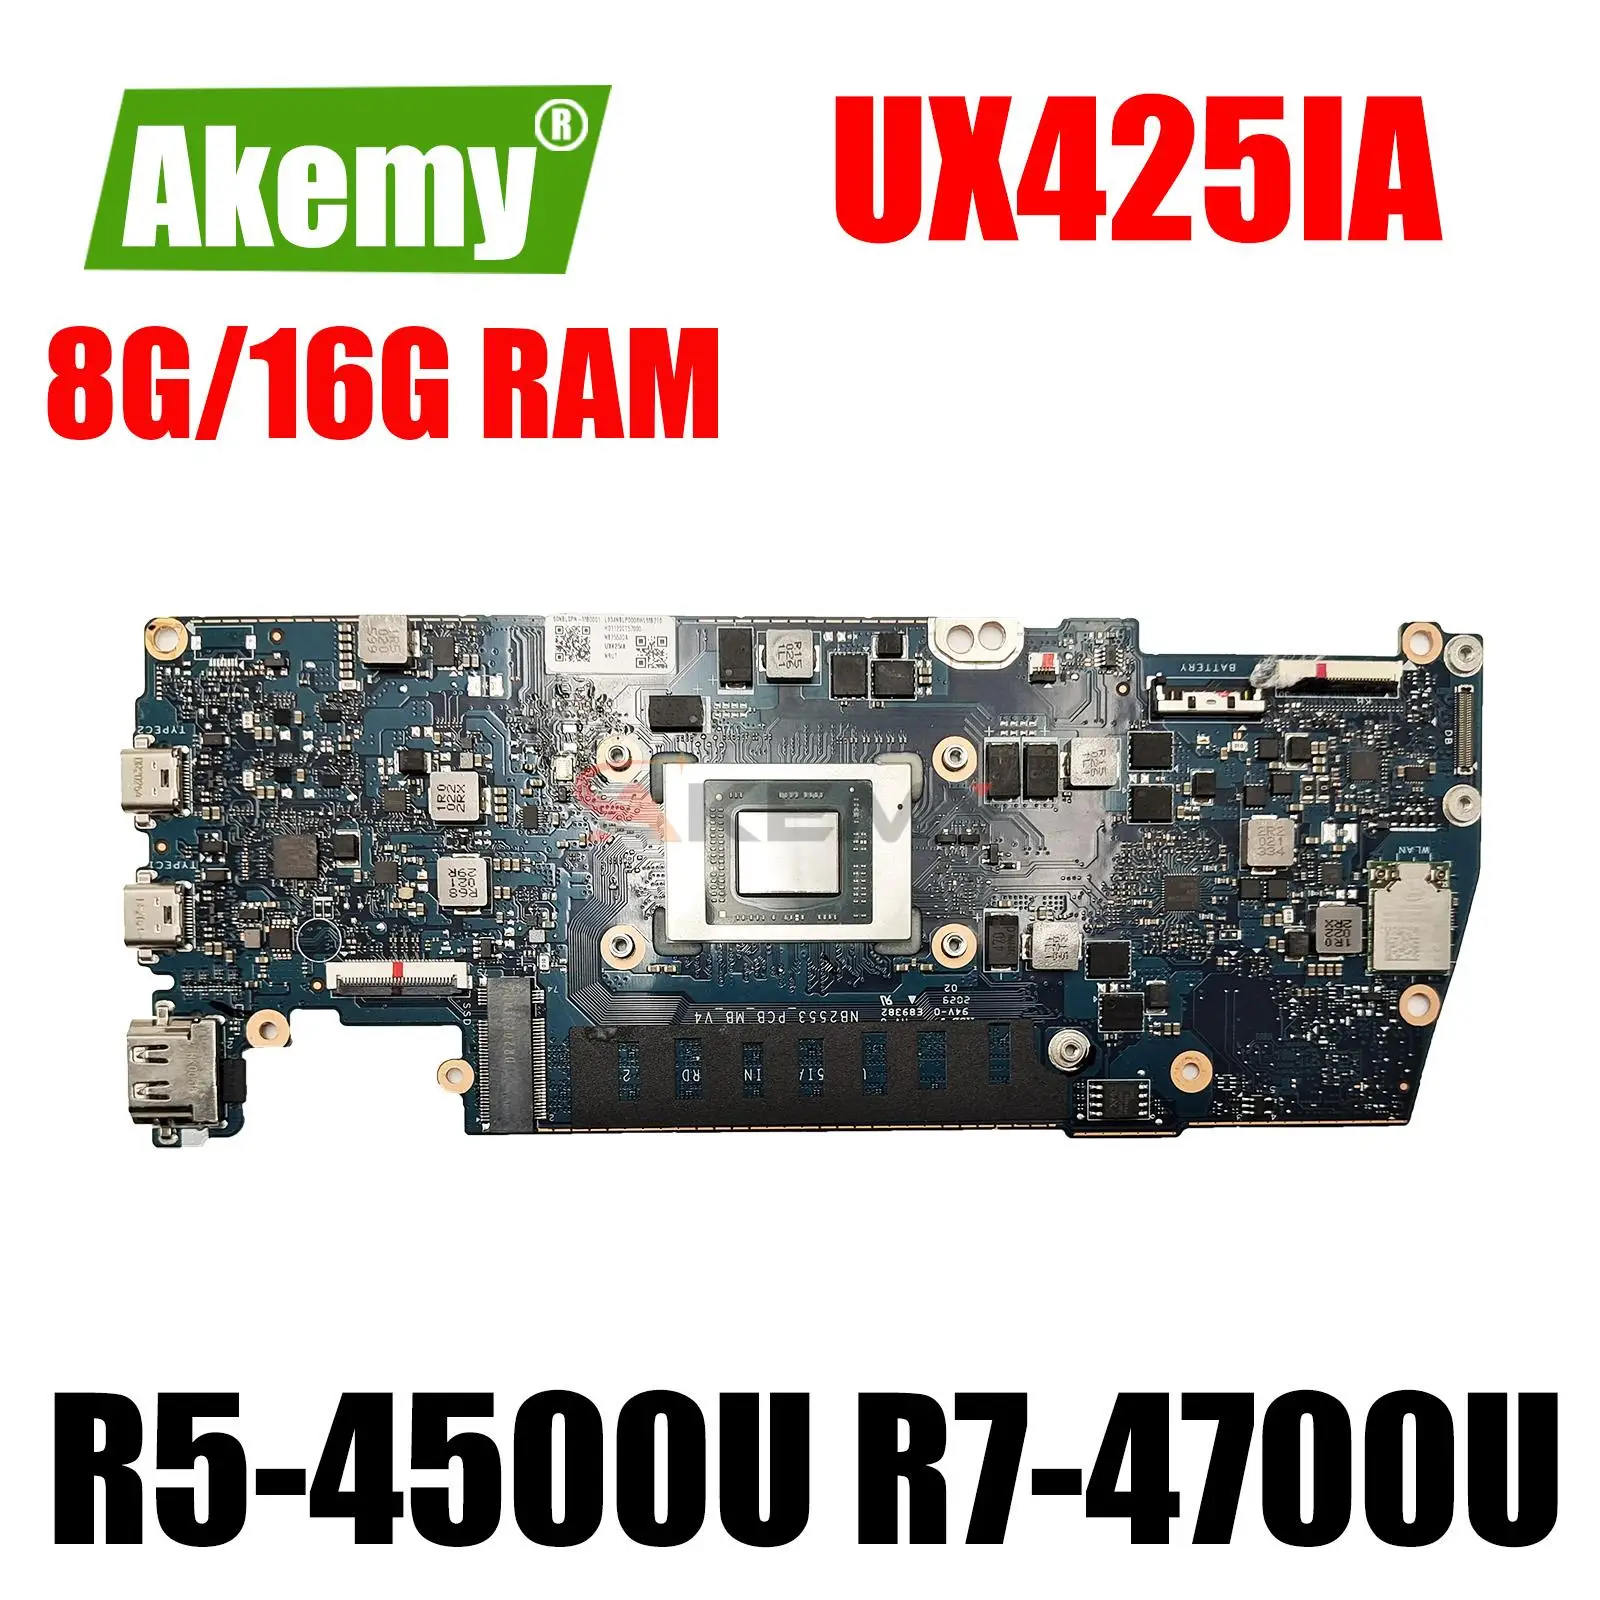 

UX425IA Motherboard For ASUS ZenBook UX425 UX425IA UX425I UM425IA Laptop Mainboard With R5-4500U R7-4700U CPU 8GB 16GB RAM